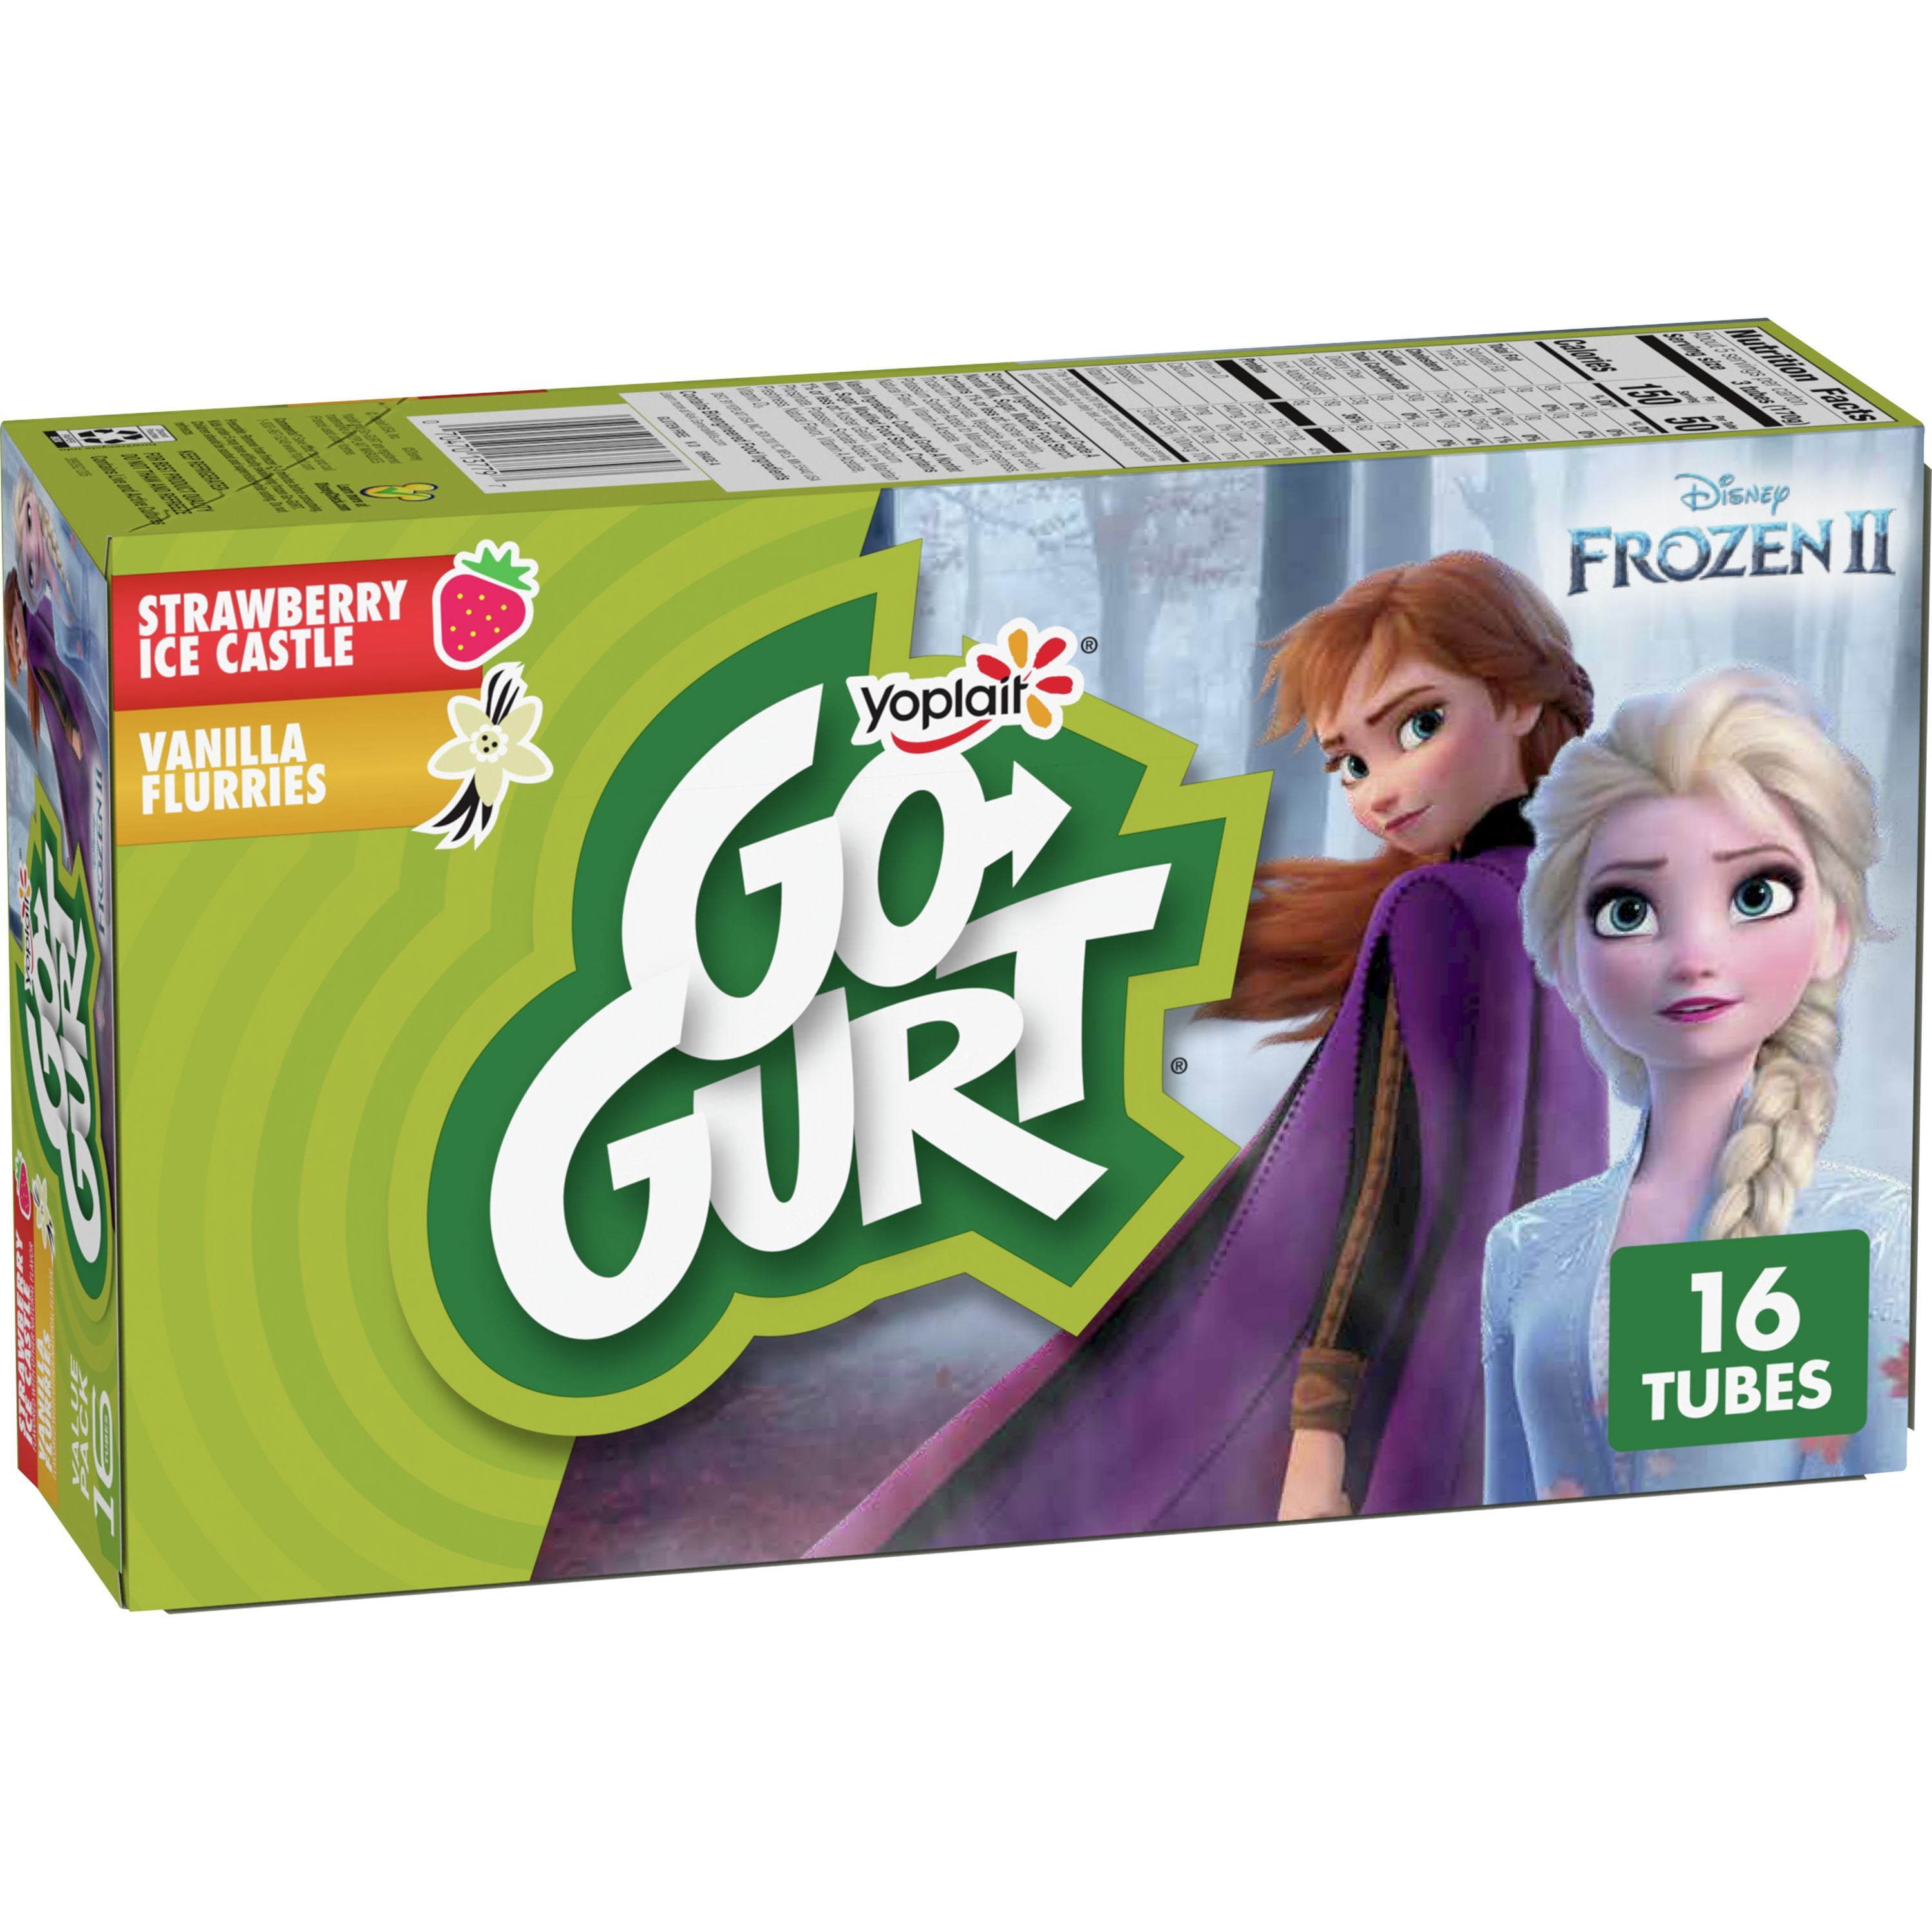 Go-GURT Disney Frozen Strawberry Ice Castle and Vanilla Flurries Kids Fat Free Yogurt Variety Pack, Gluten Free, 2 oz. Yogurt Tubes (16 Count)